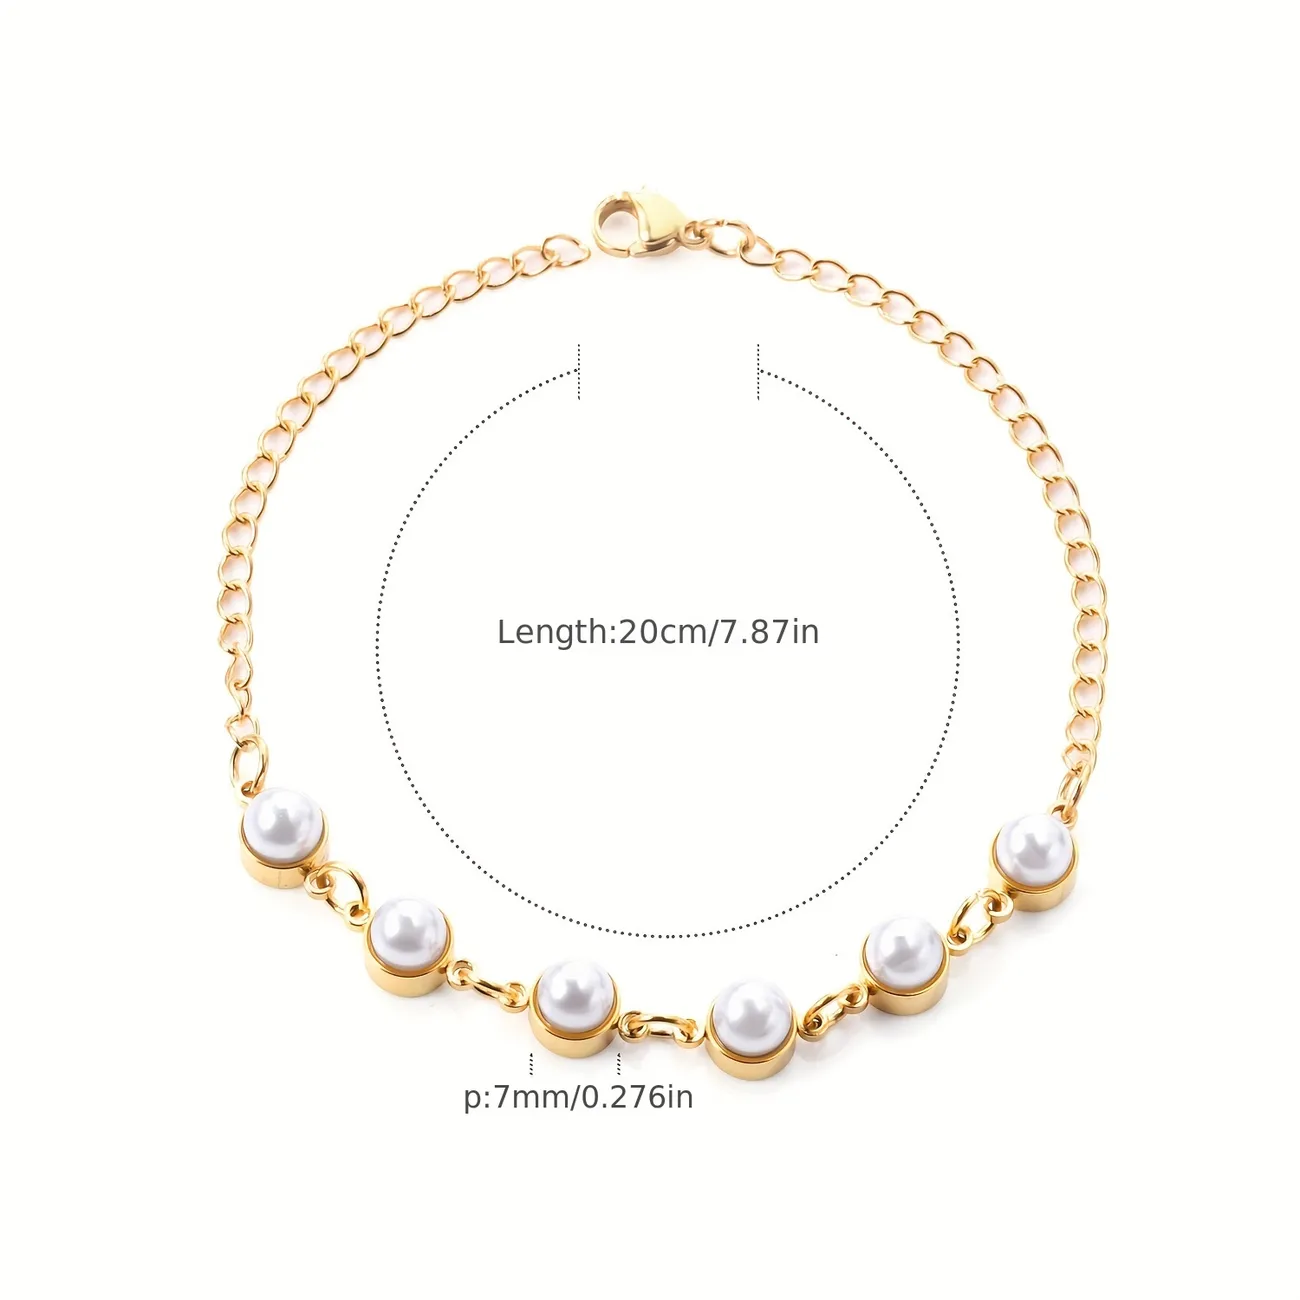 LUXUSTEEL Dainty Gold Color Stainless Steel Bracelet Women Crystal